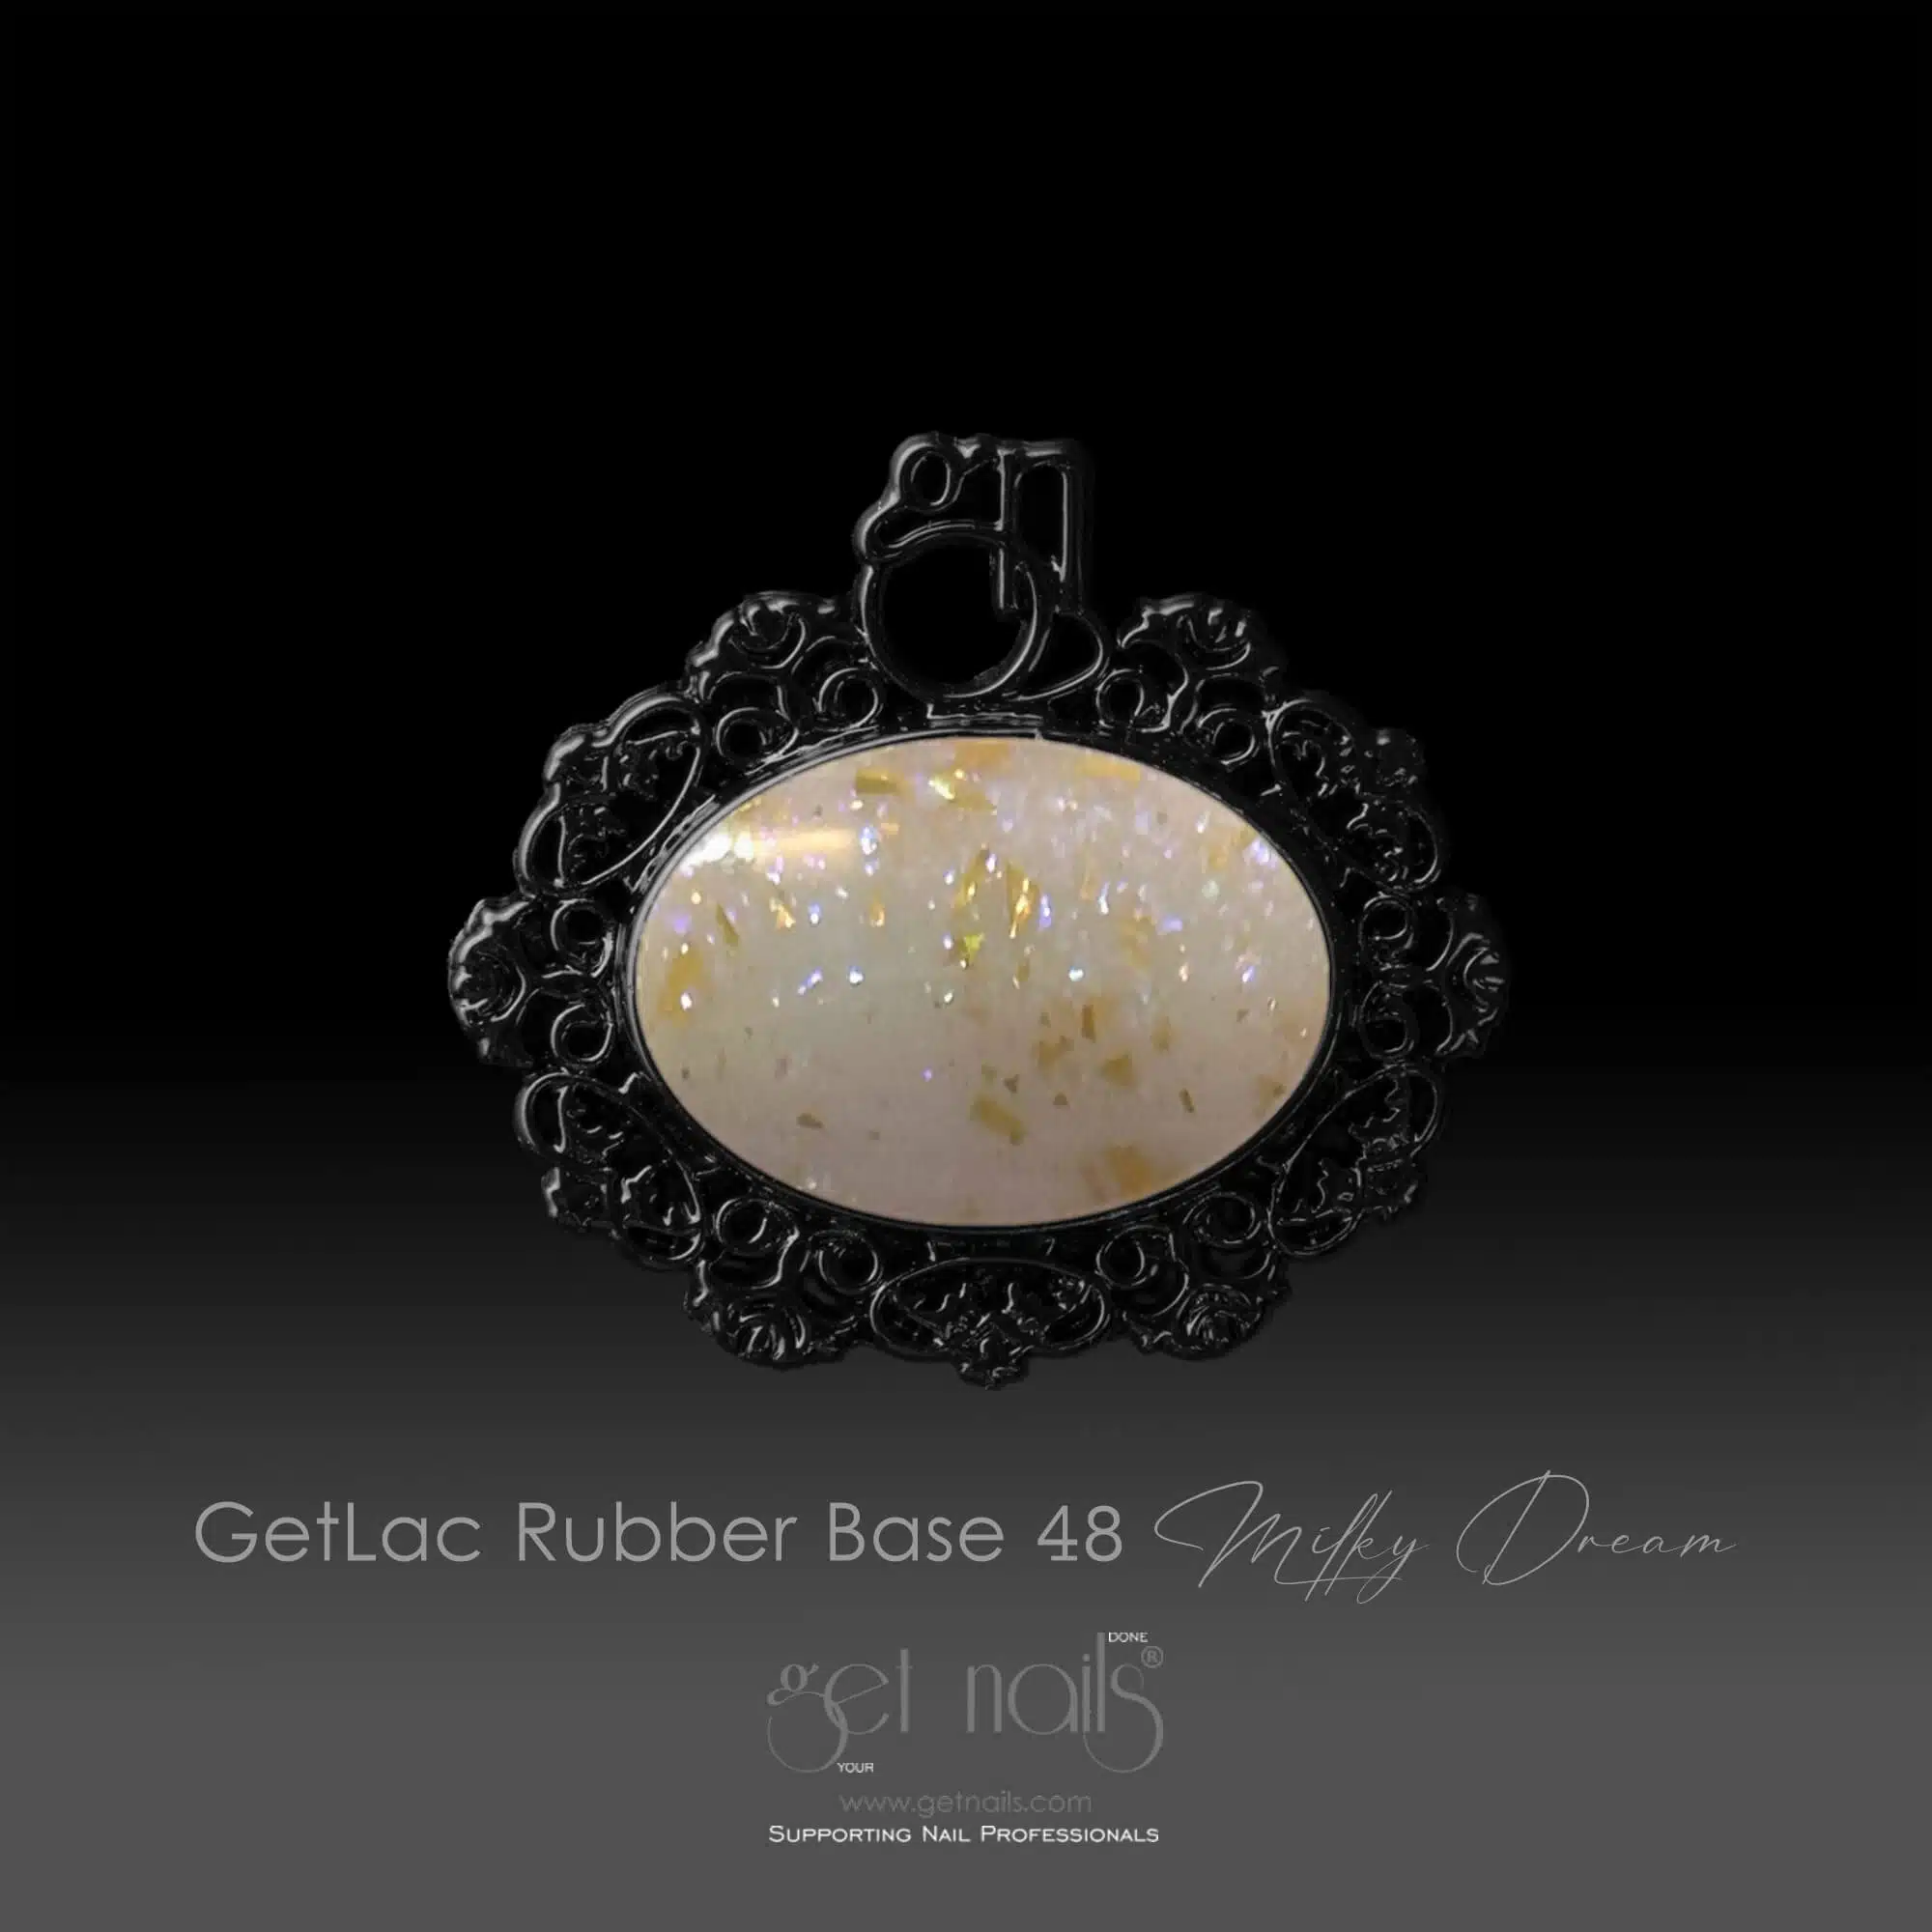 Get Nails Austria - GetLac Rubber Base 48 Milky Dream 15g